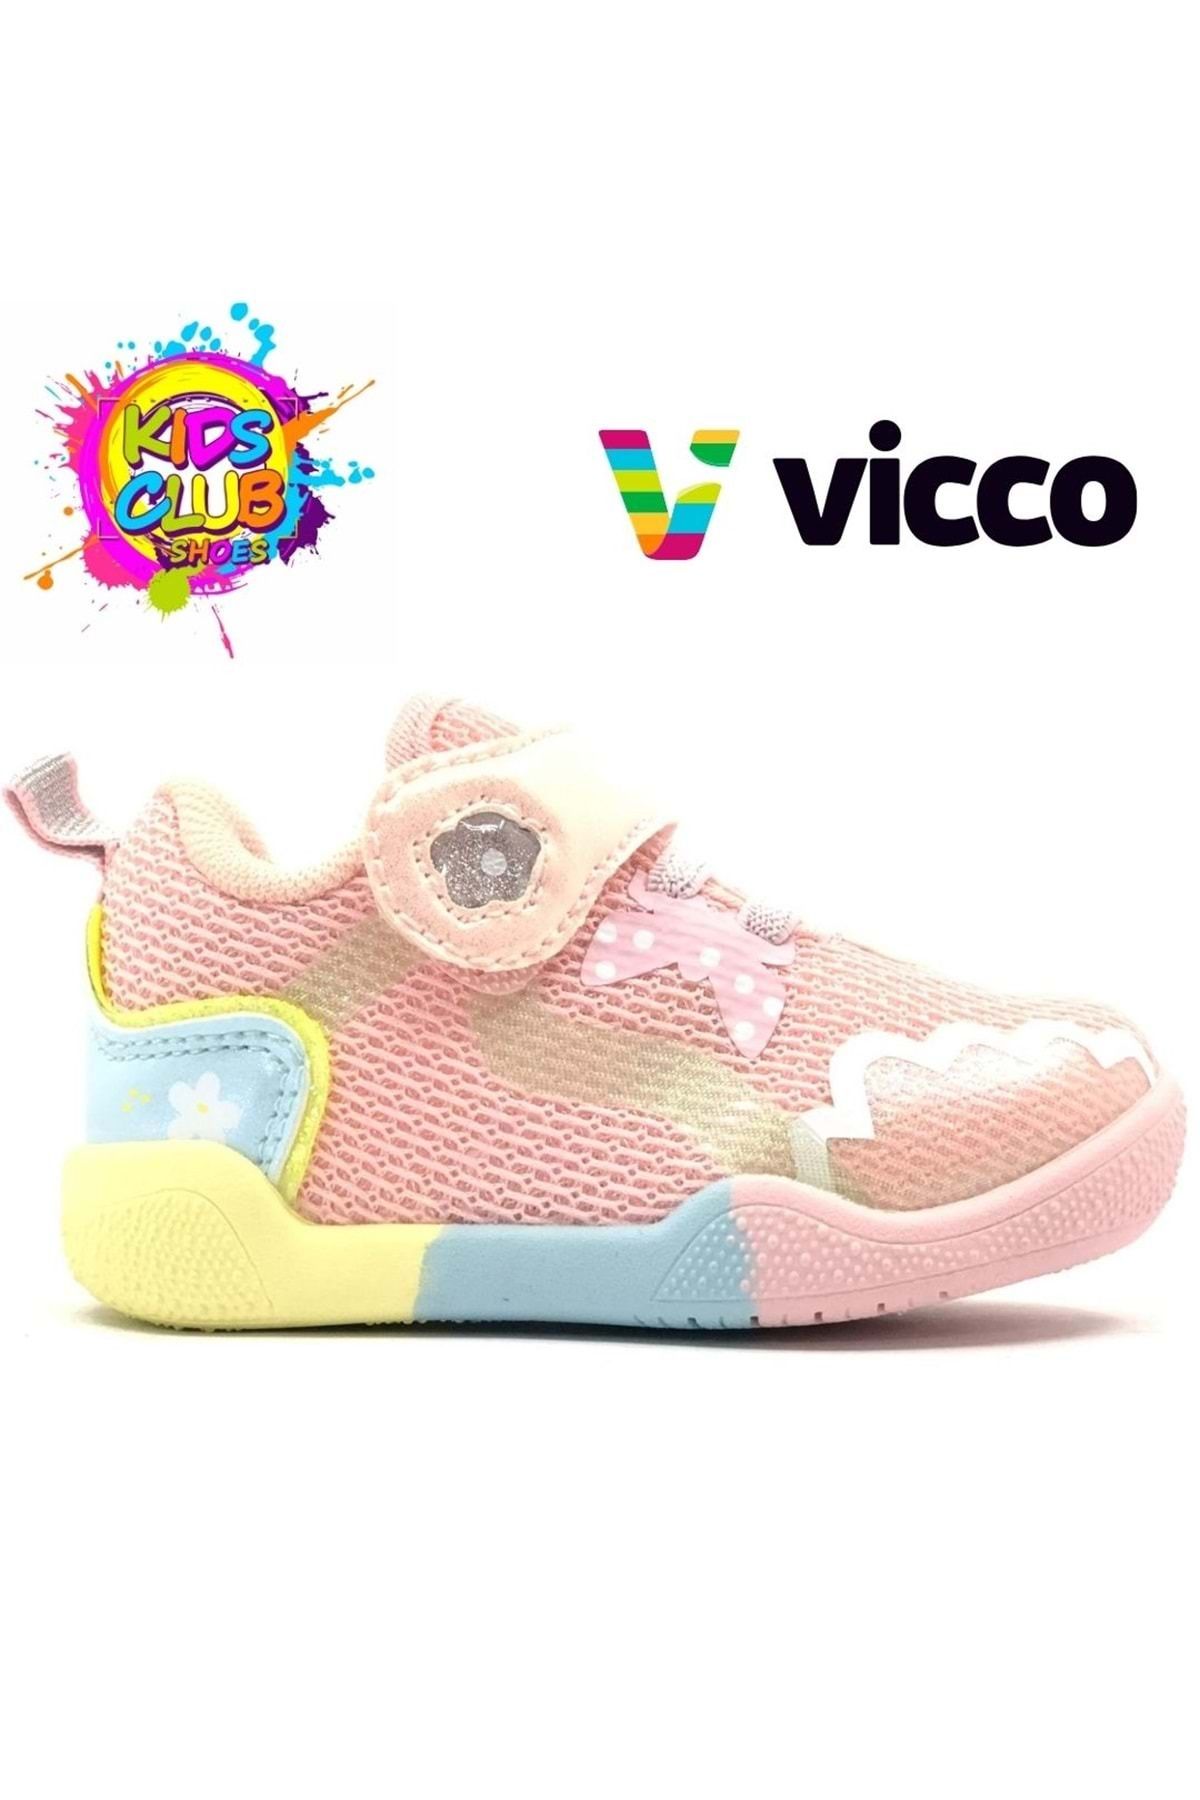 Kids Club Shoes Vicco Sia İlk Adım Bebek Ortopedik Çocuk Spor Ayakkabı PEMBE